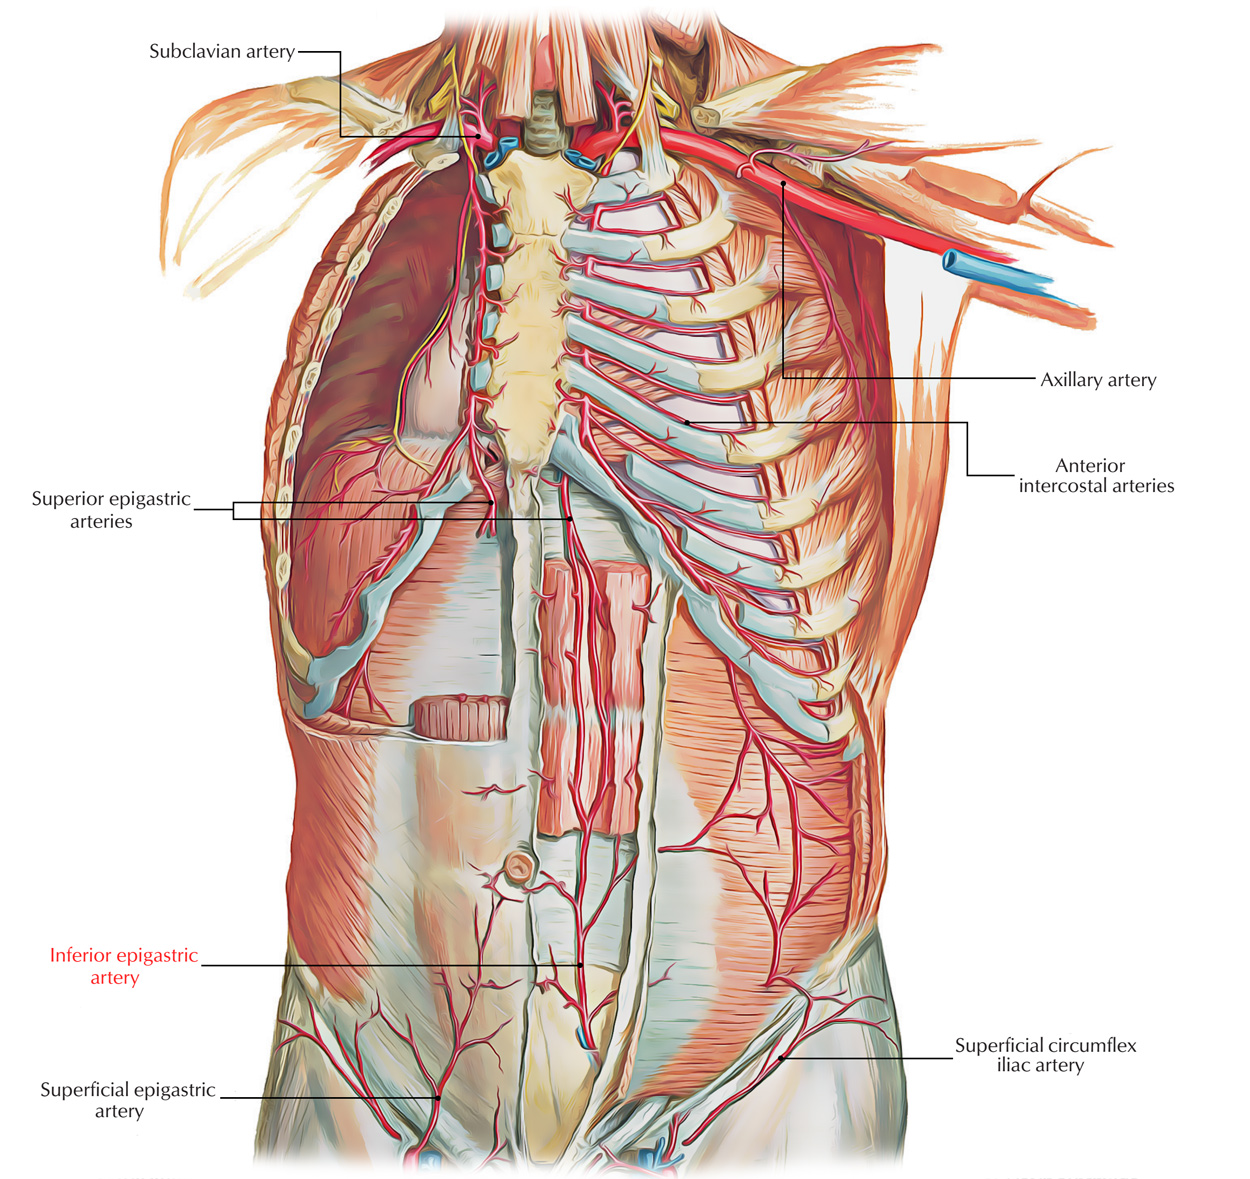 Inferior Epigastric Artery